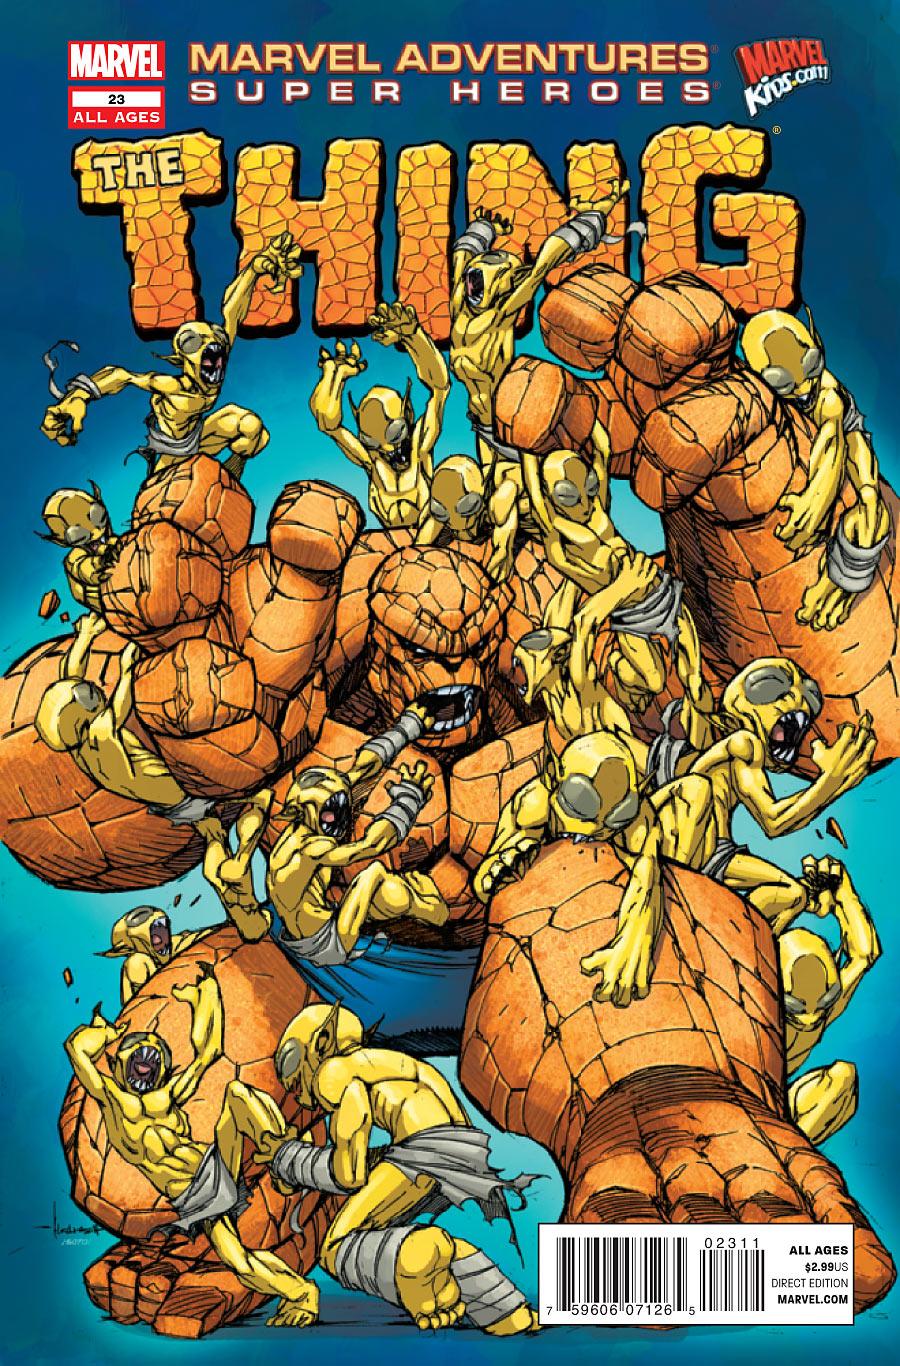 Marvel Adventures: Super Heroes Vol. 2 #23